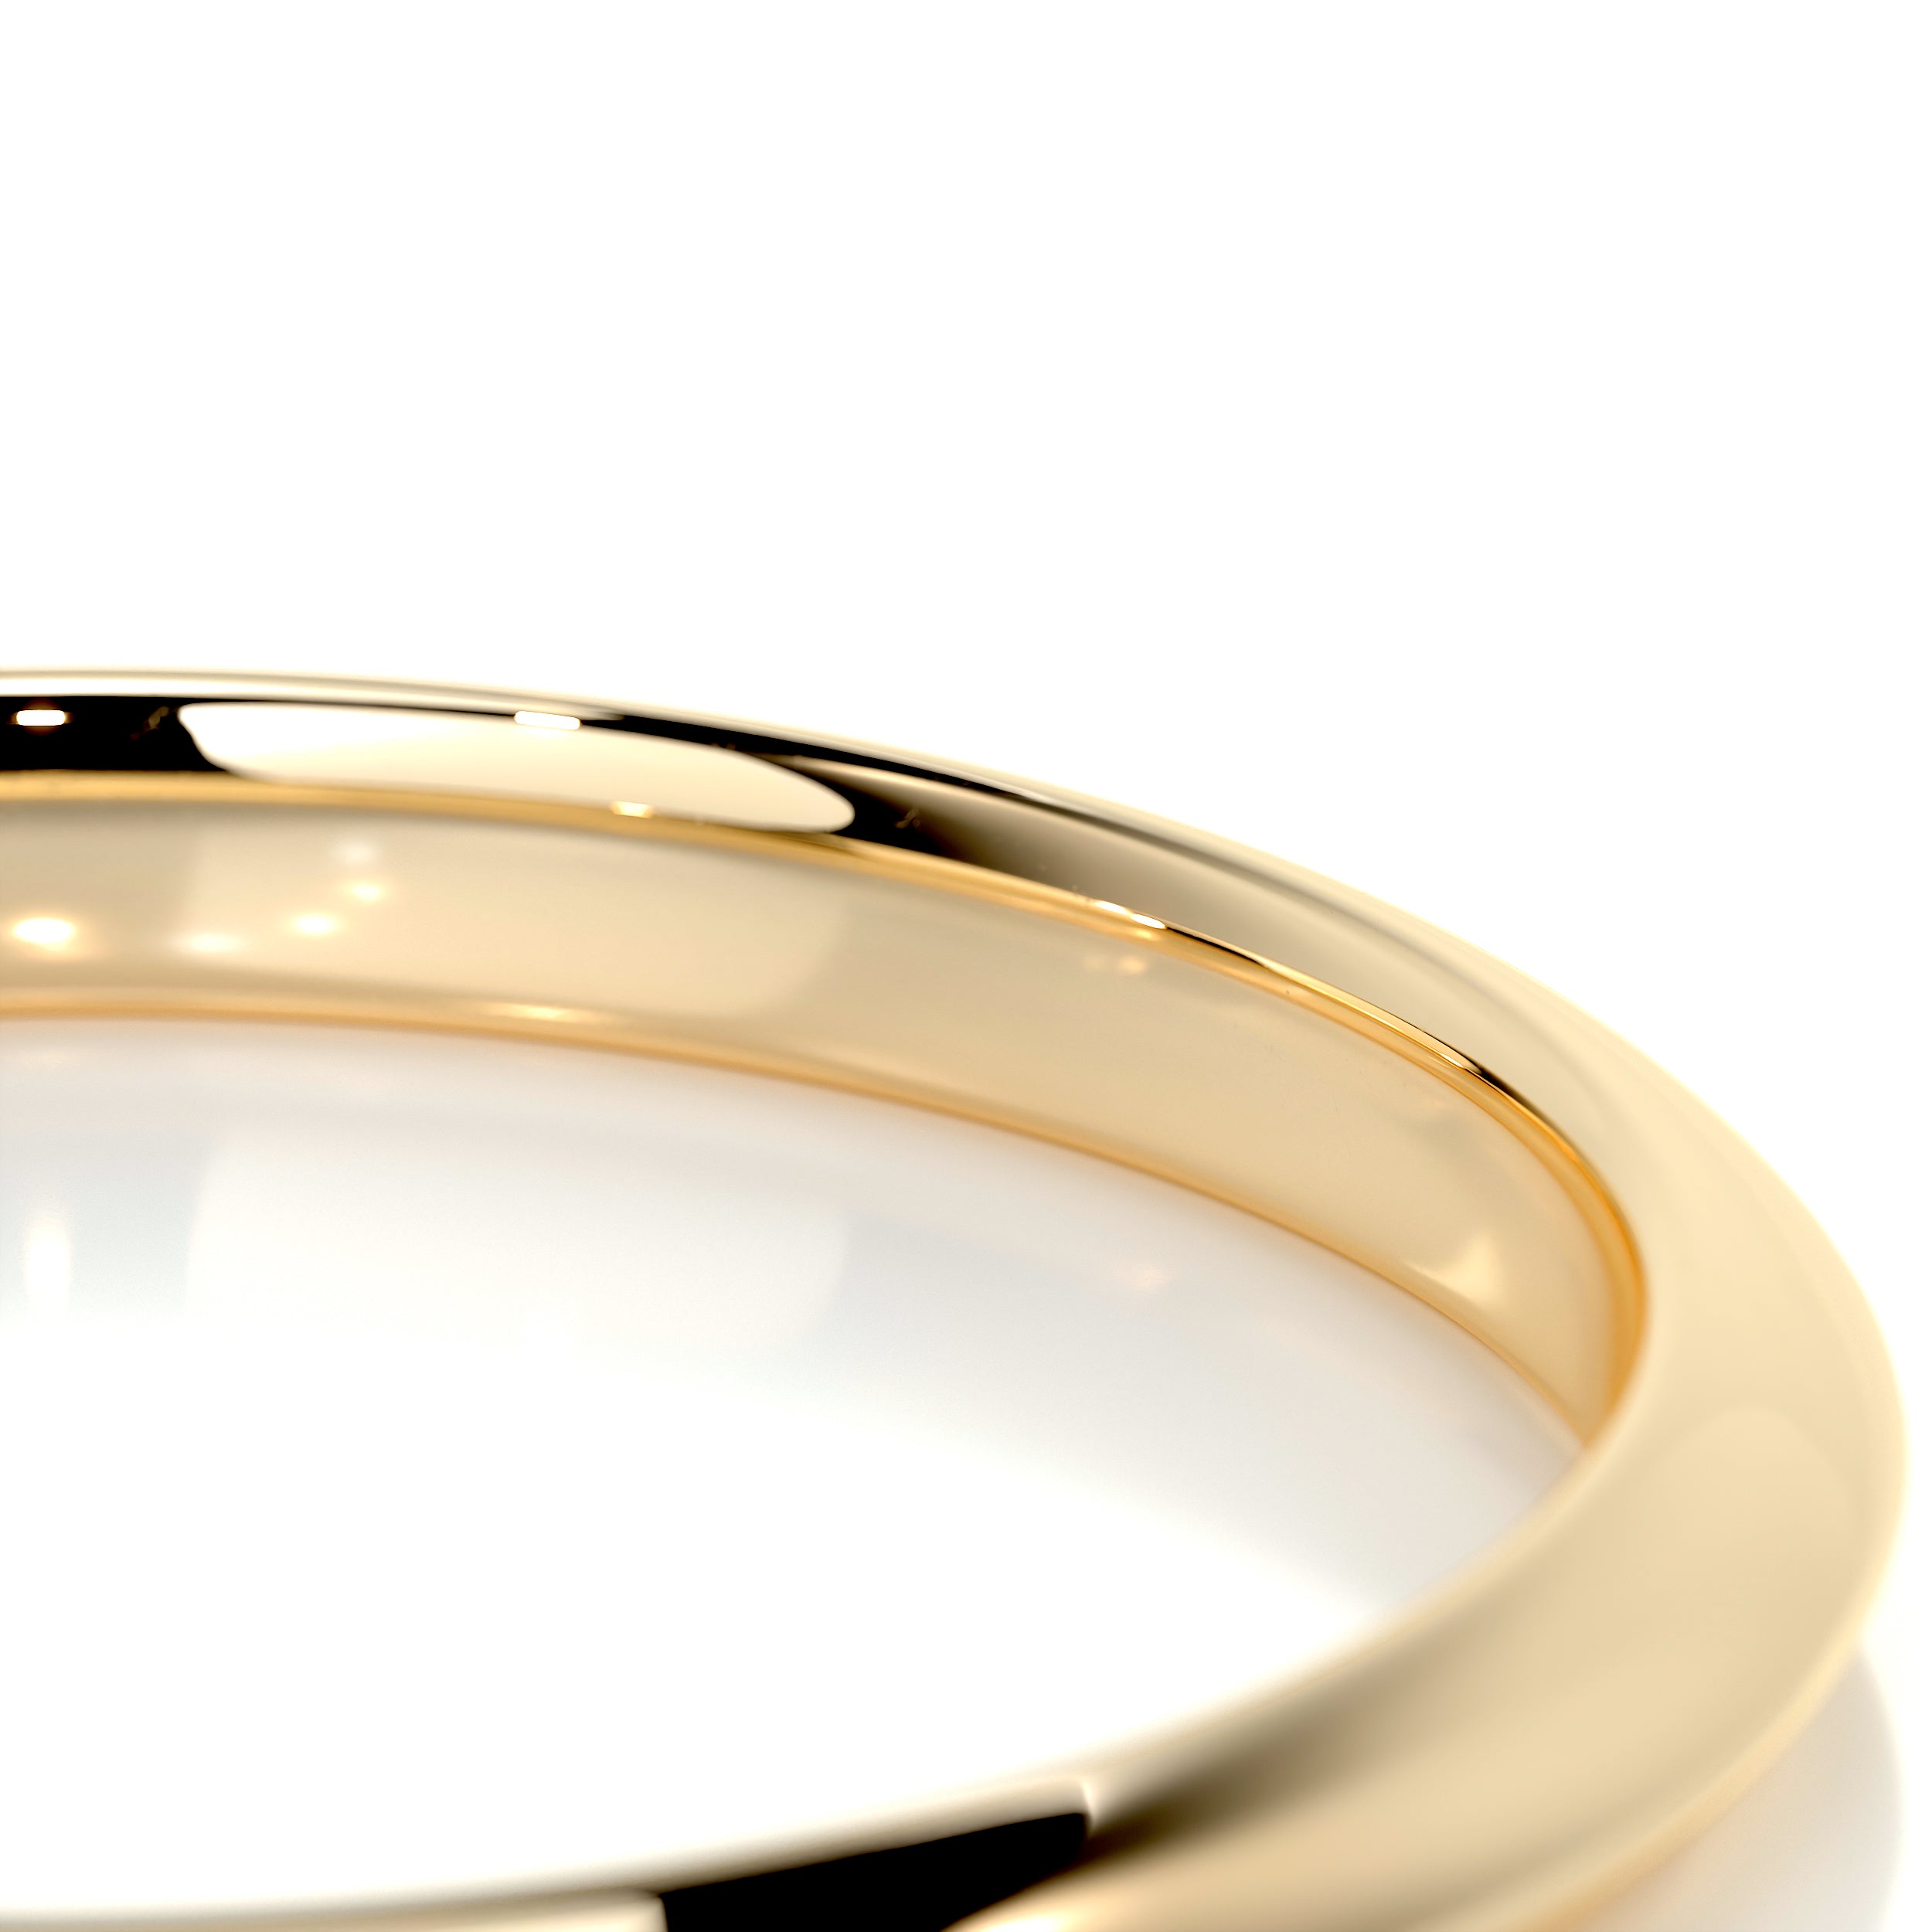 Alexis Wedding Ring -18K Yellow Gold